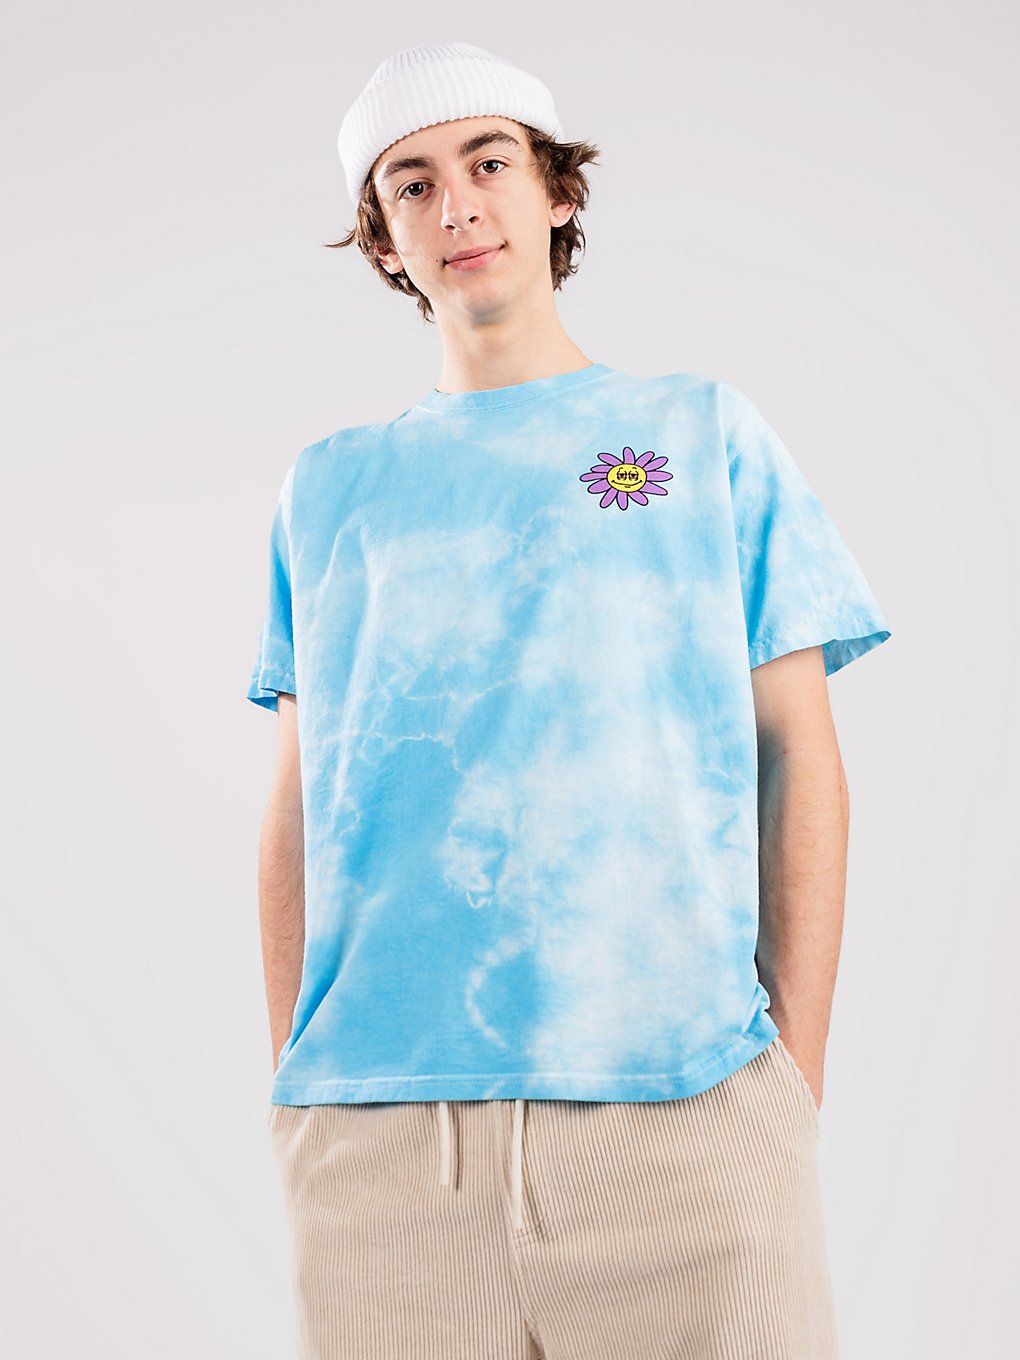 A.Lab Dream High T-Shirt pacific blue tie dye kaufen